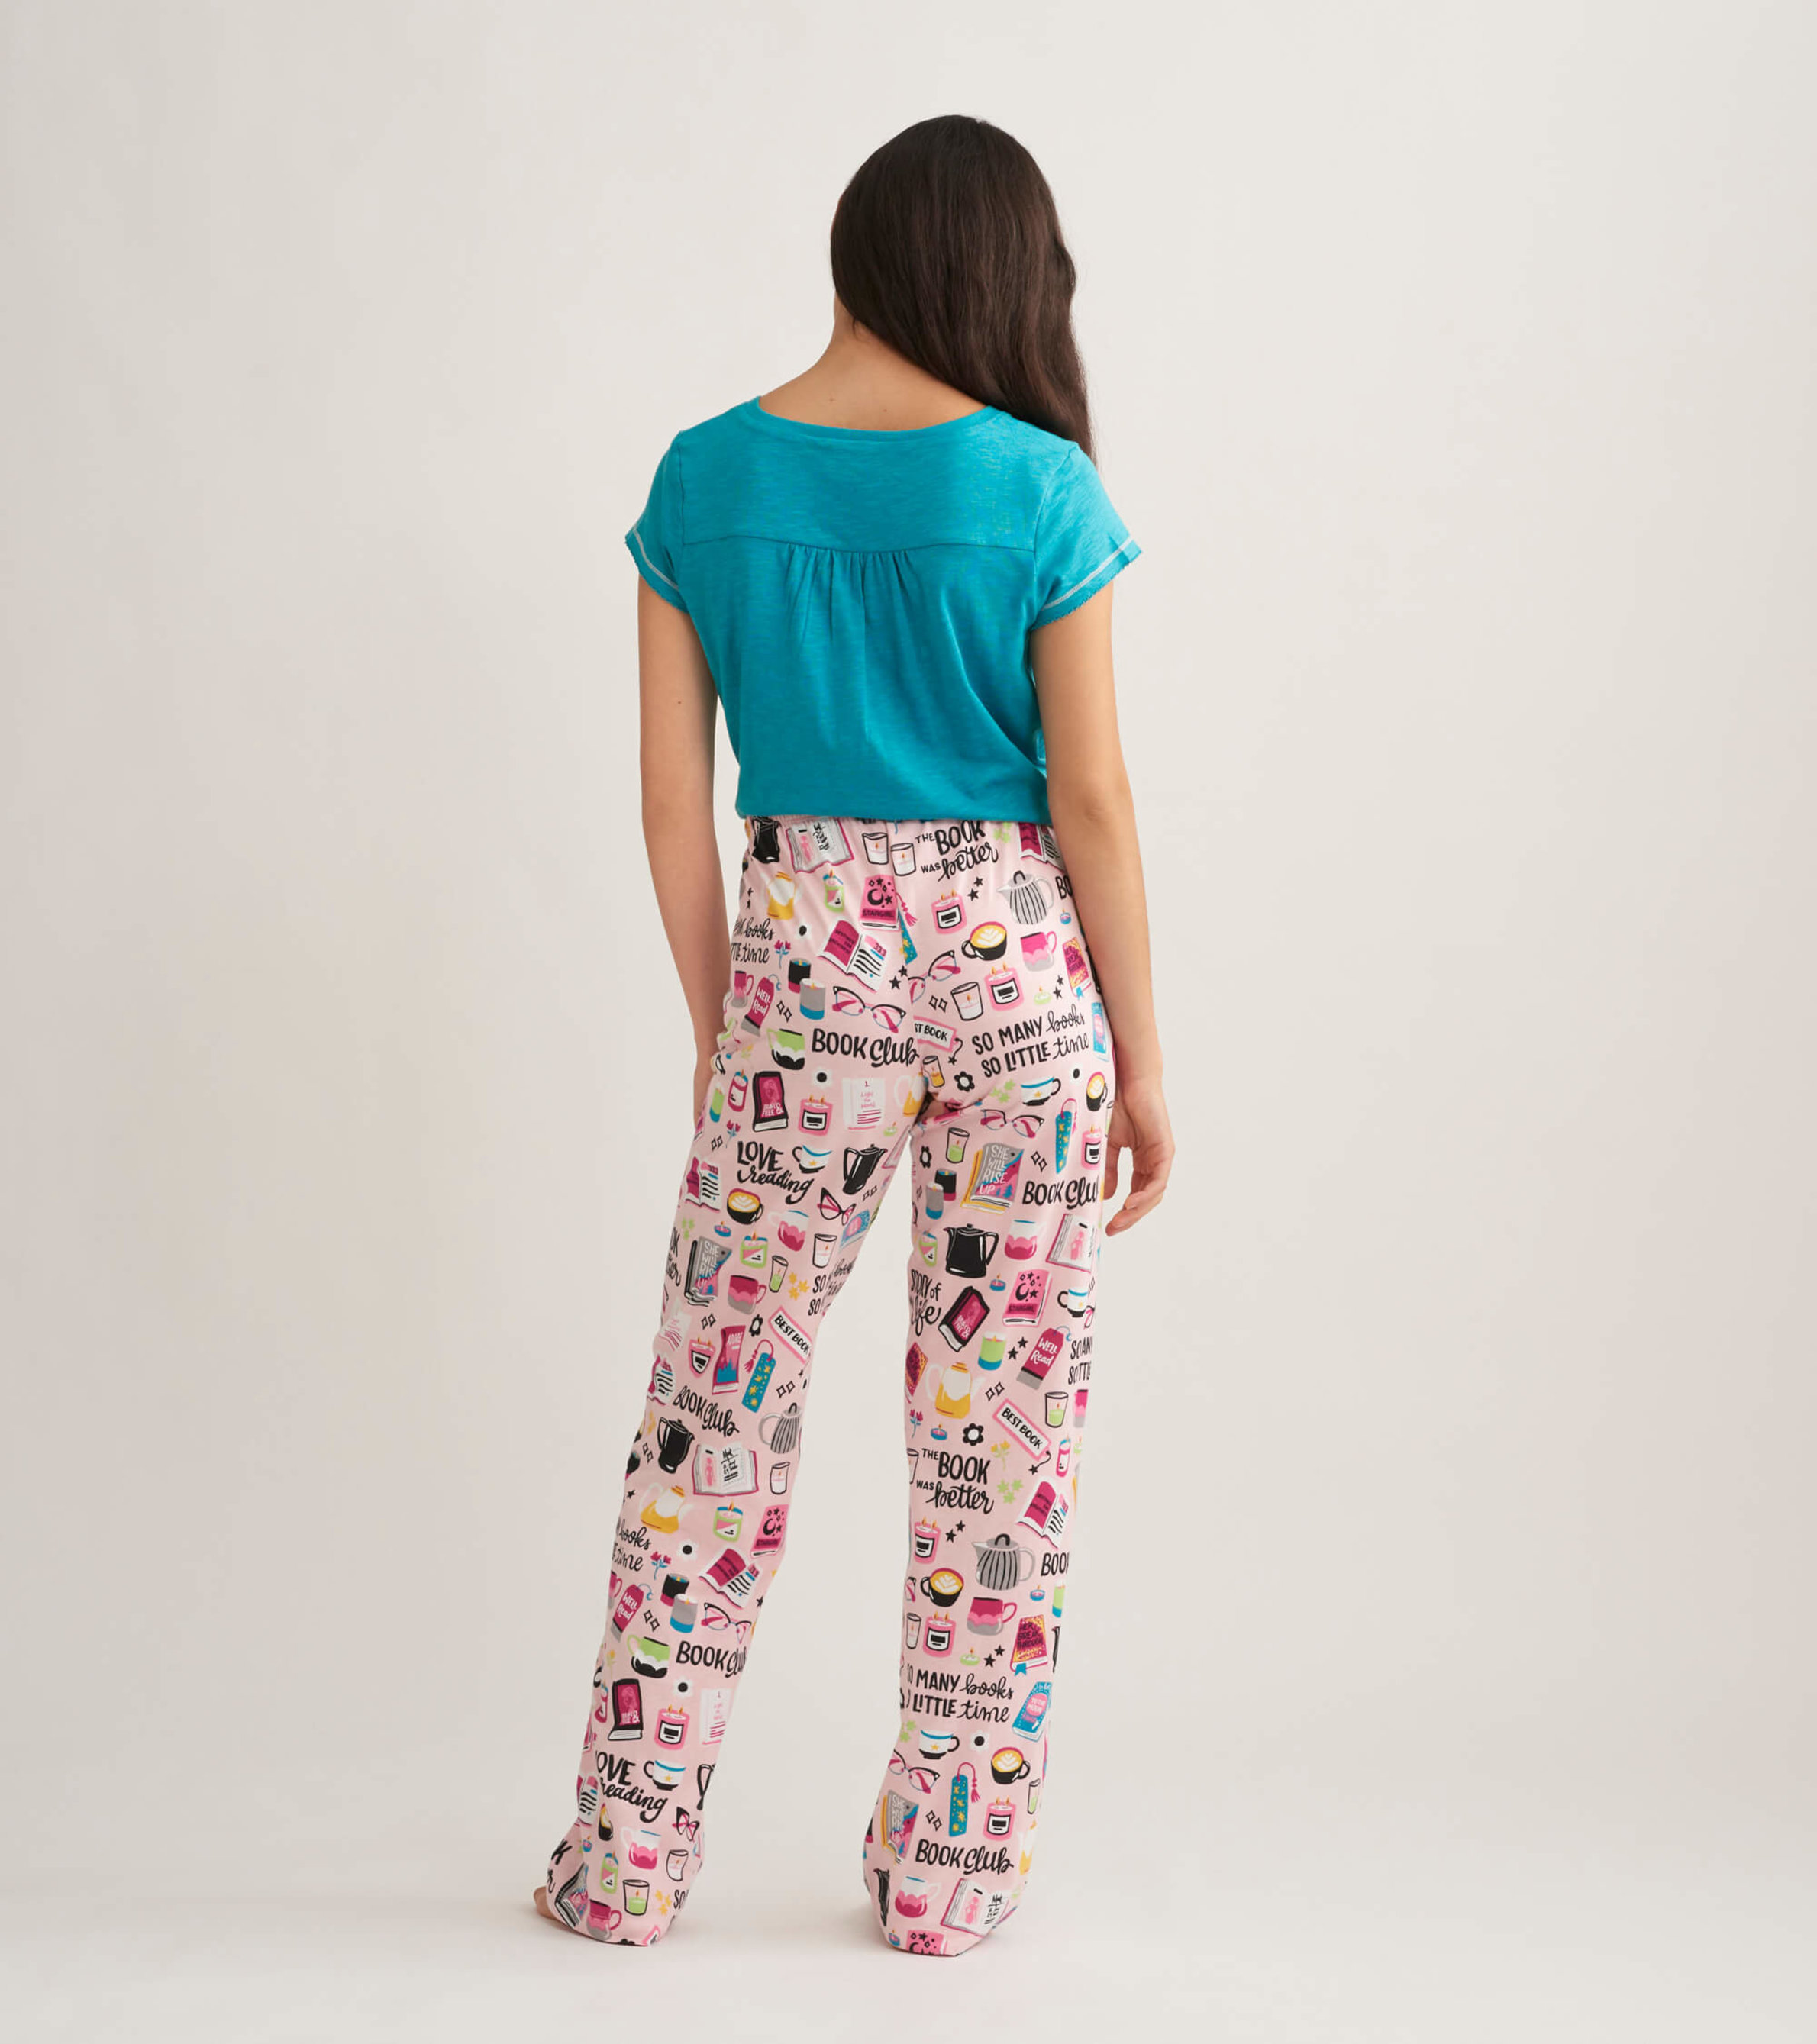 Women's Pajama Bottoms, Light Weight, Super Soft Pajama Lounge Pants  in Prints | eBay